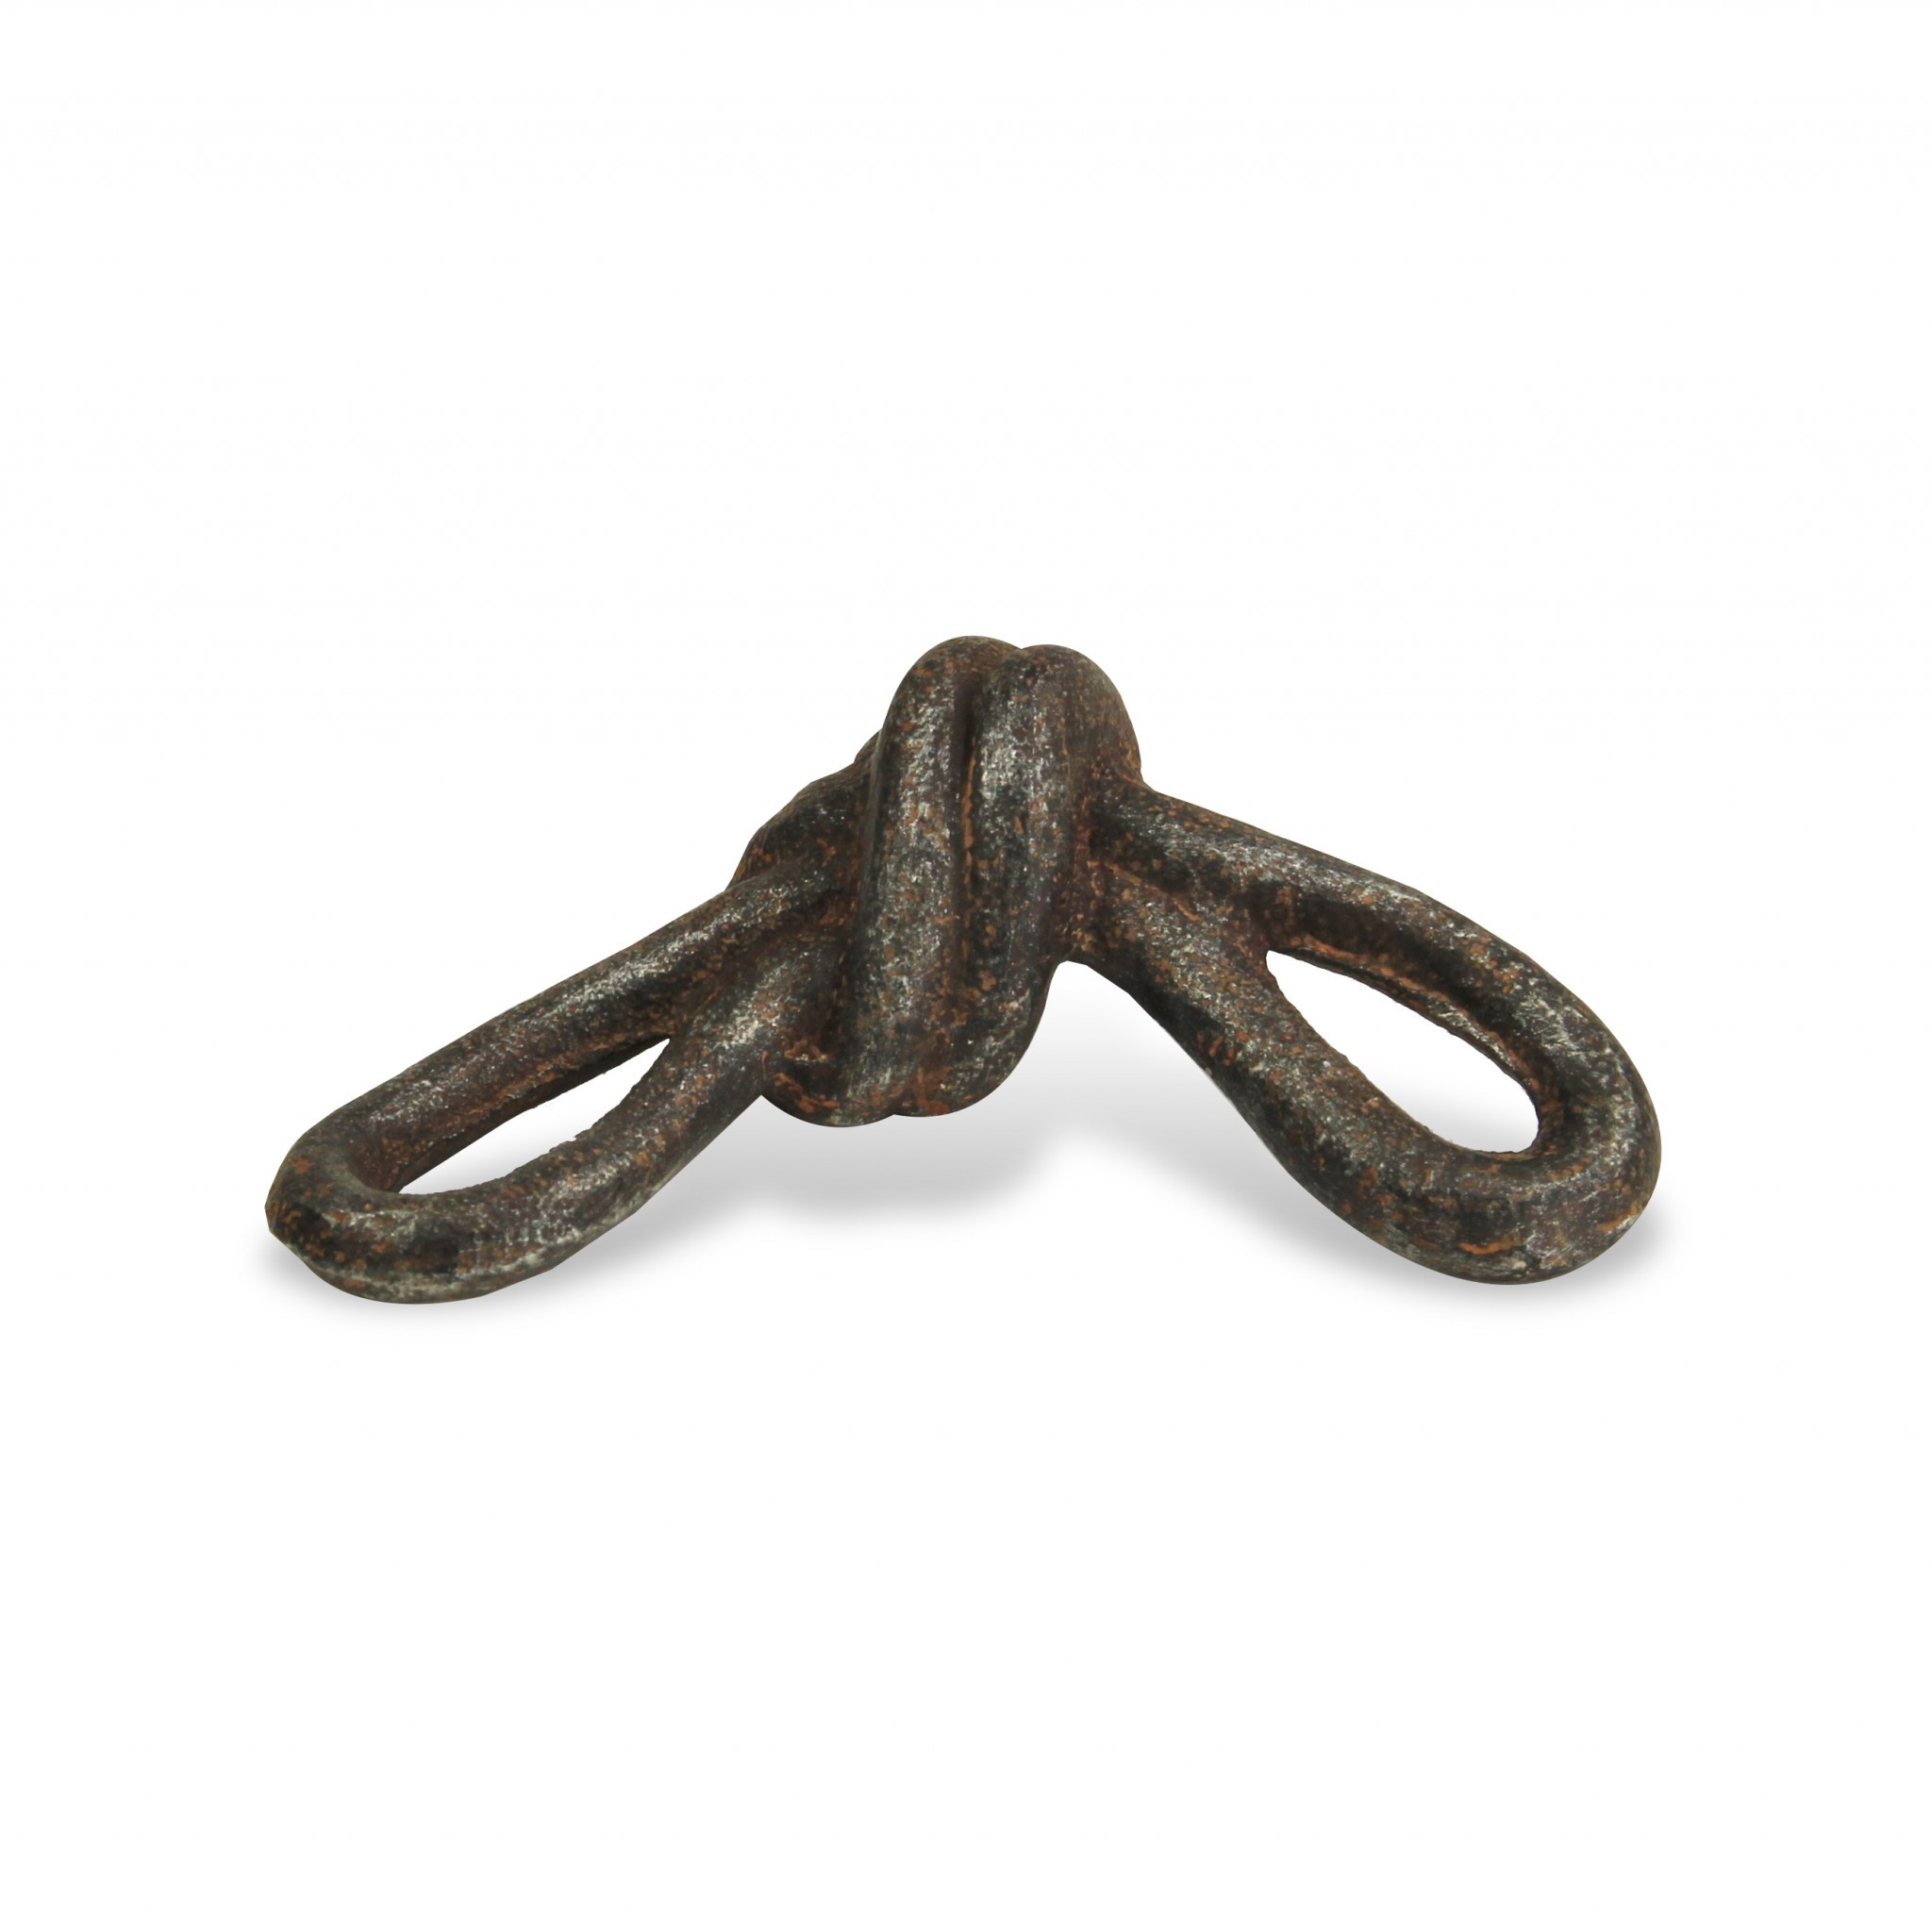 Rustic Gray Cast Iron Knot Sculpture